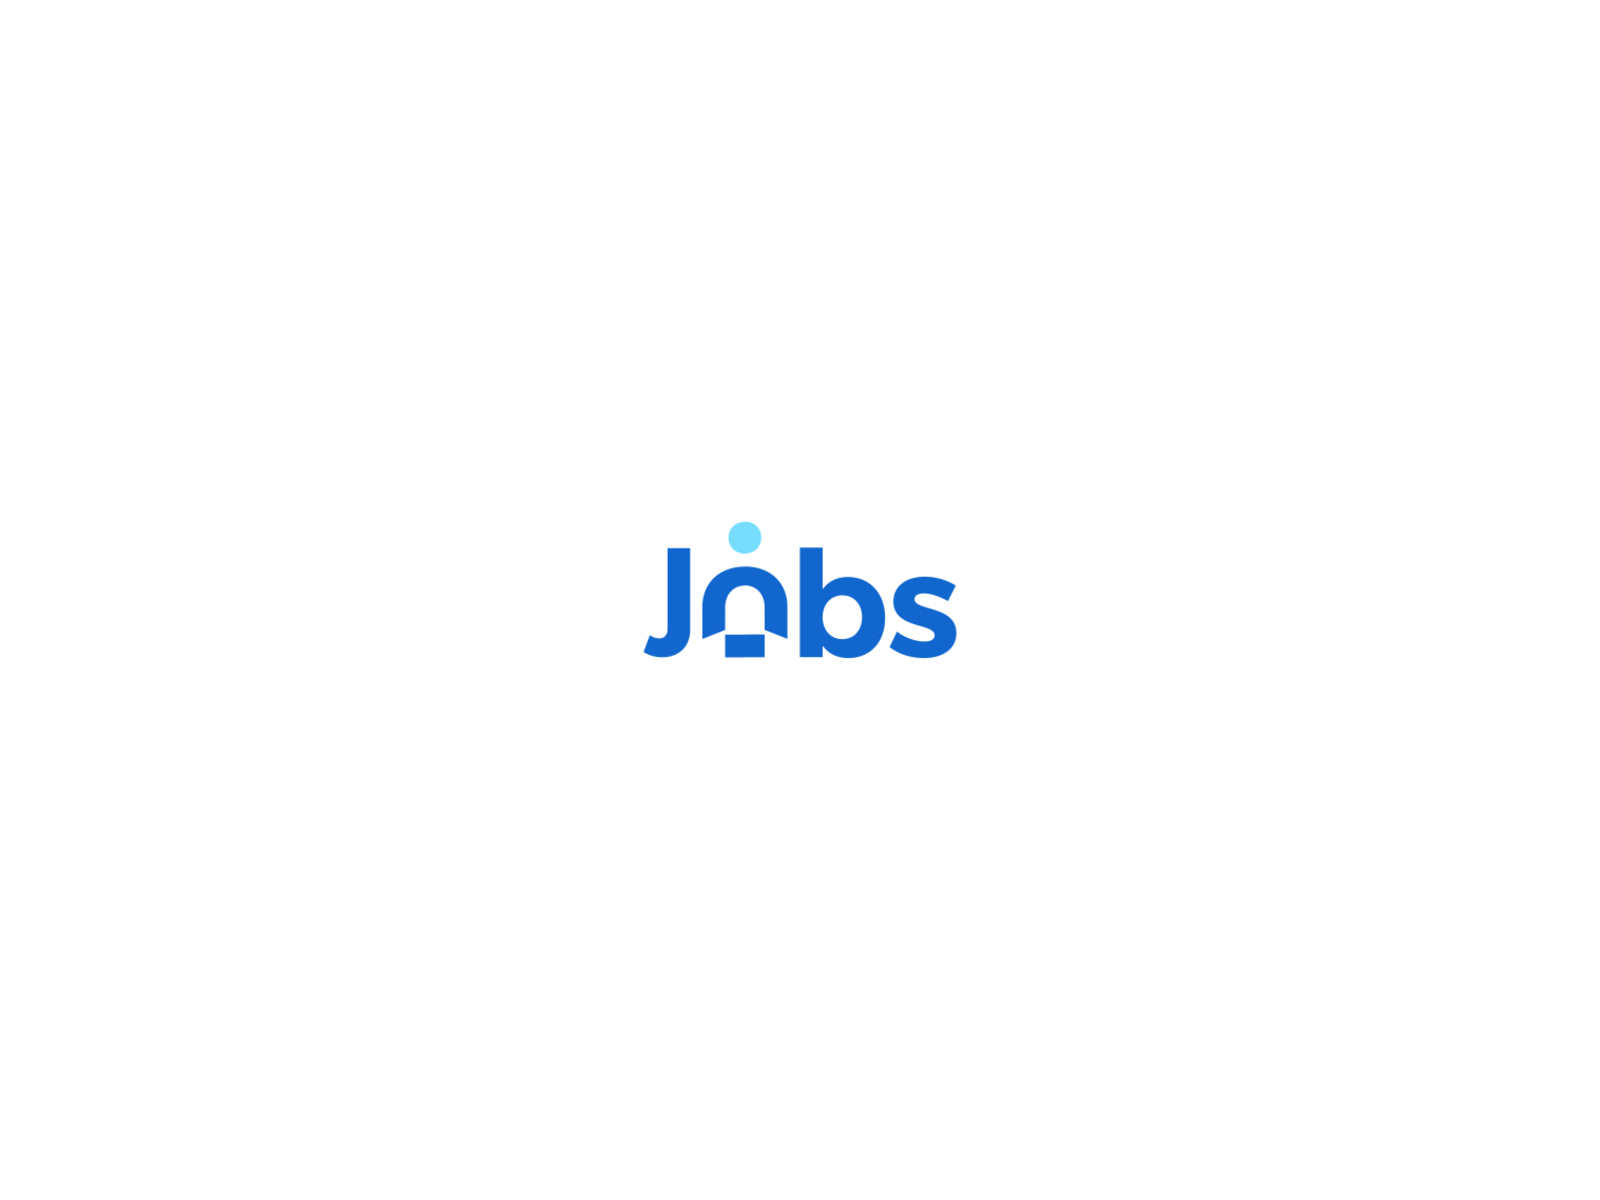 Jobs wordmark logo by Babu Ahmed | Logo Designer on Dribbble